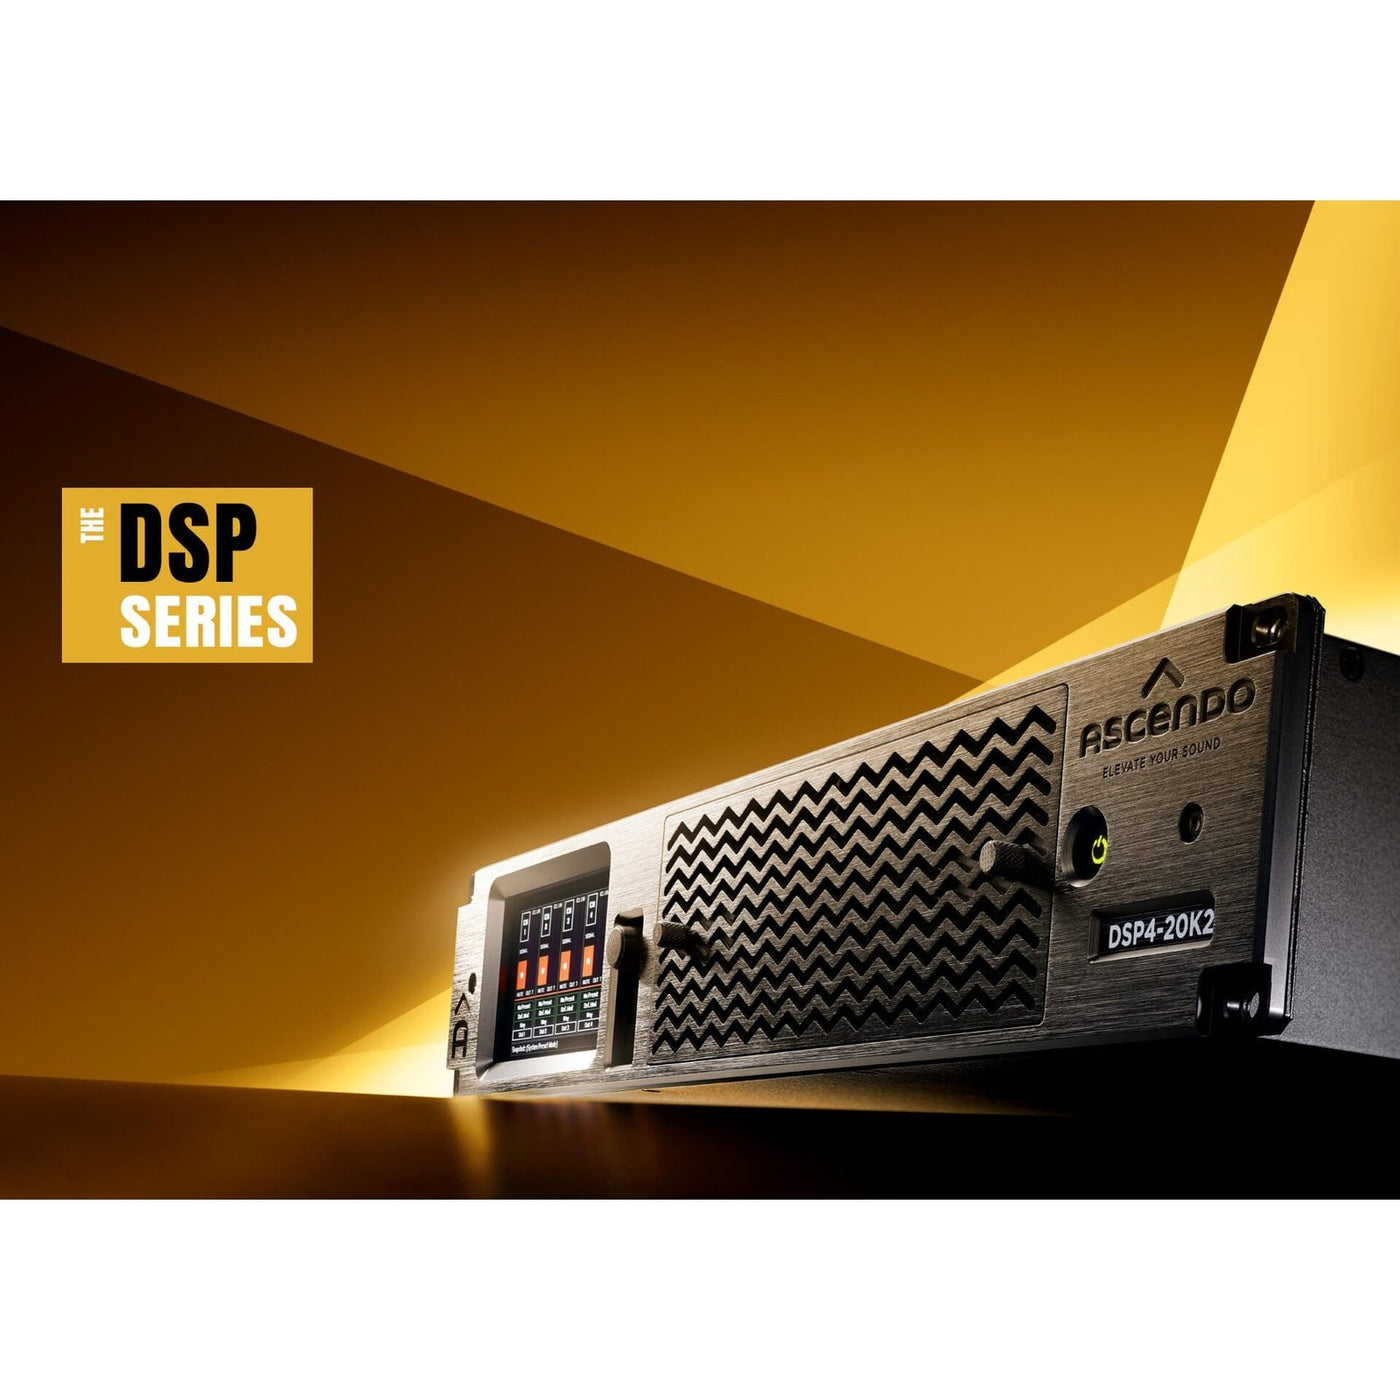 Ascendo Ascendo DSP4-20K2 - 4-channel DSP network-controlled Class H amplifier Power Amplifiers